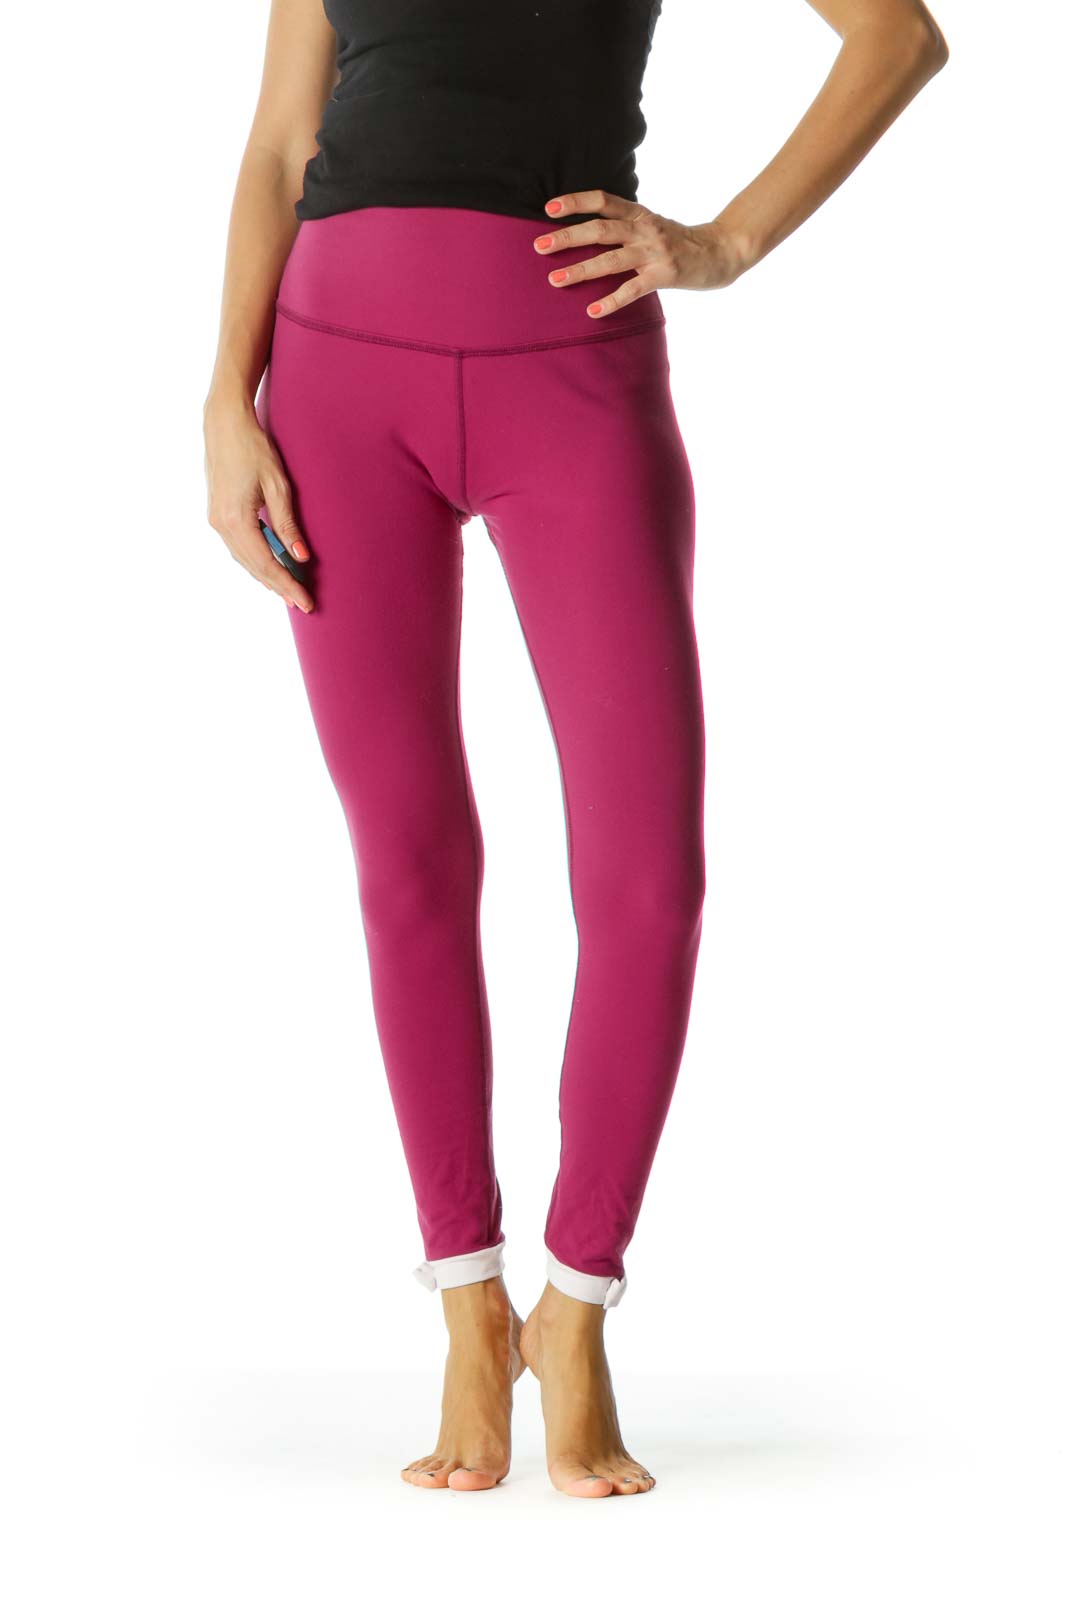 Kate Spade & Beyond Yoga - Magenta Pink Ankle-Bows Detail Yoga Pants ...